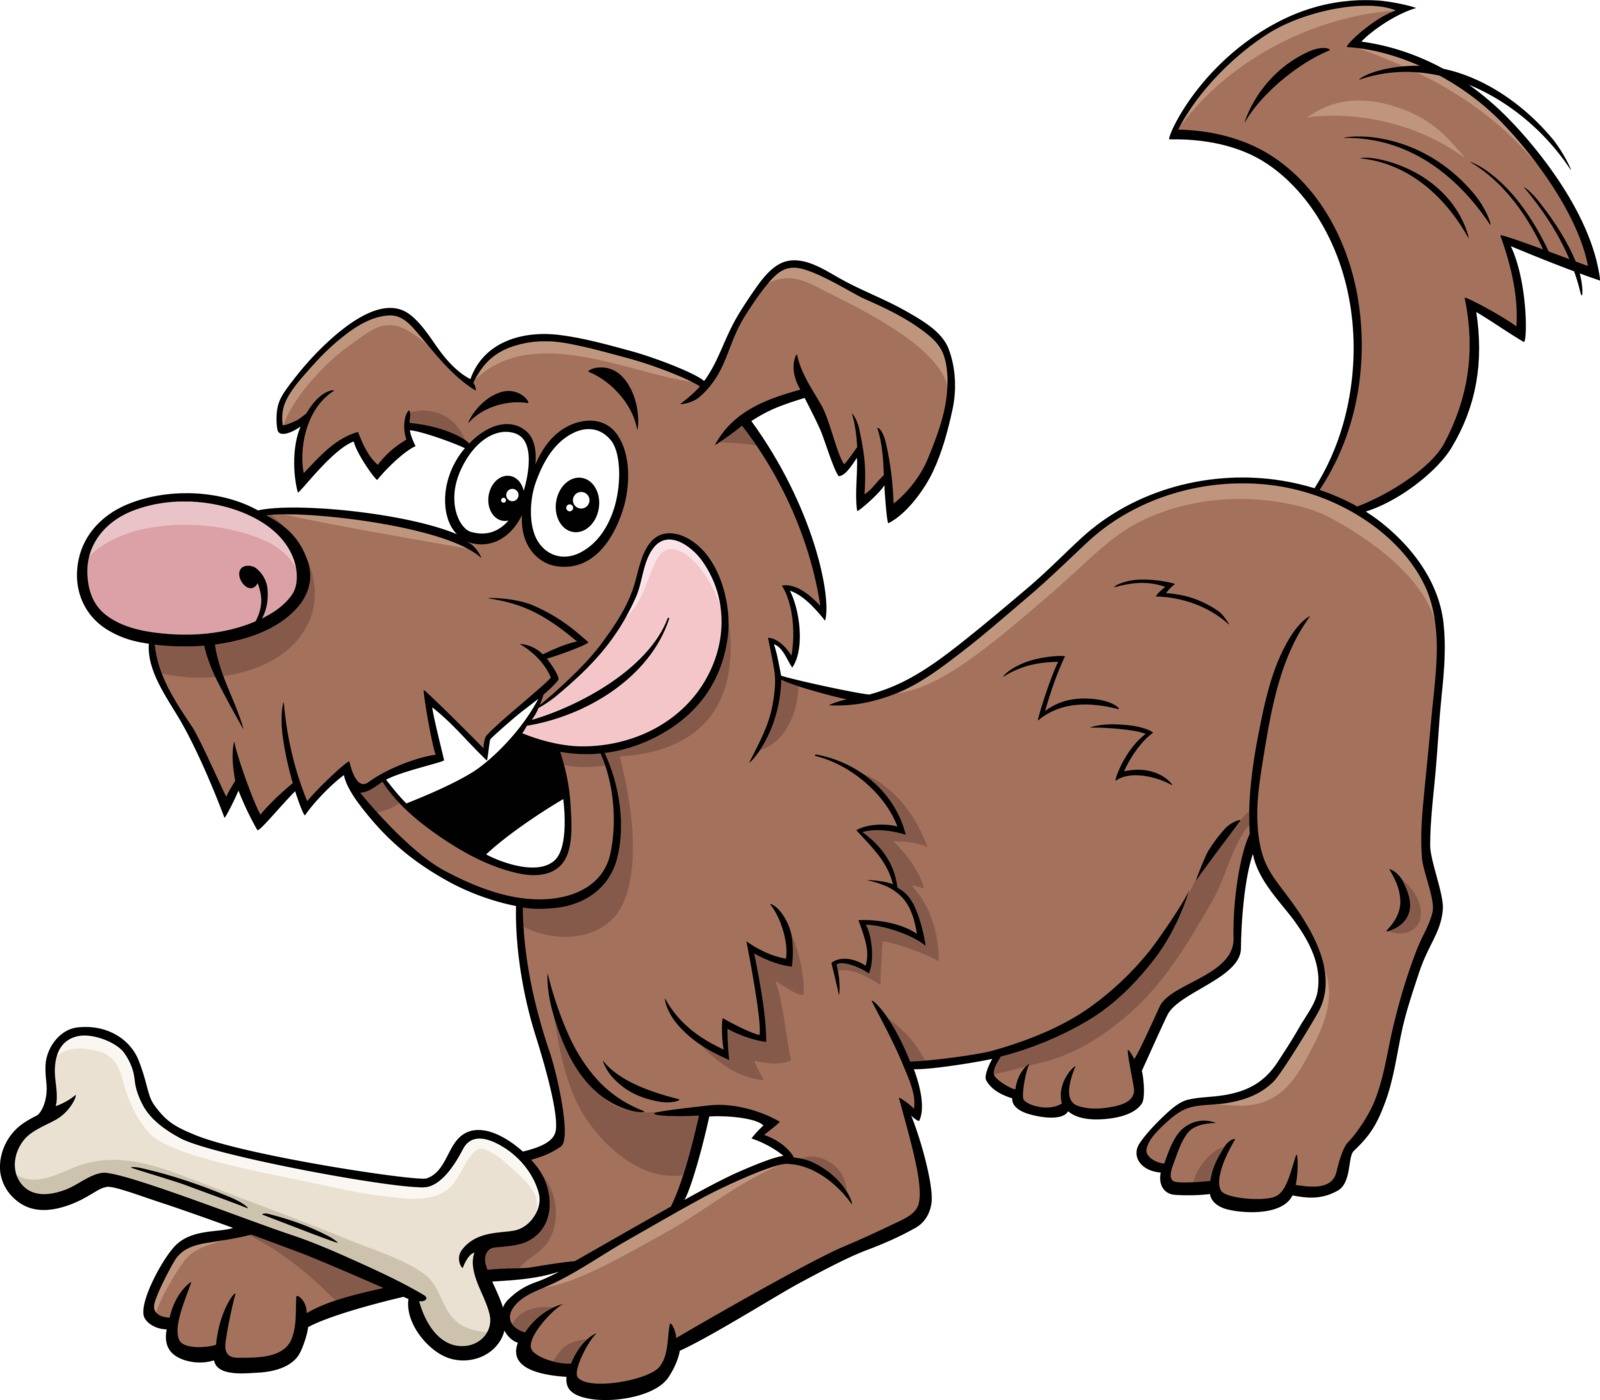 Cartoon Illustration of Happy Playful Dog Comic Animal Character with Bone